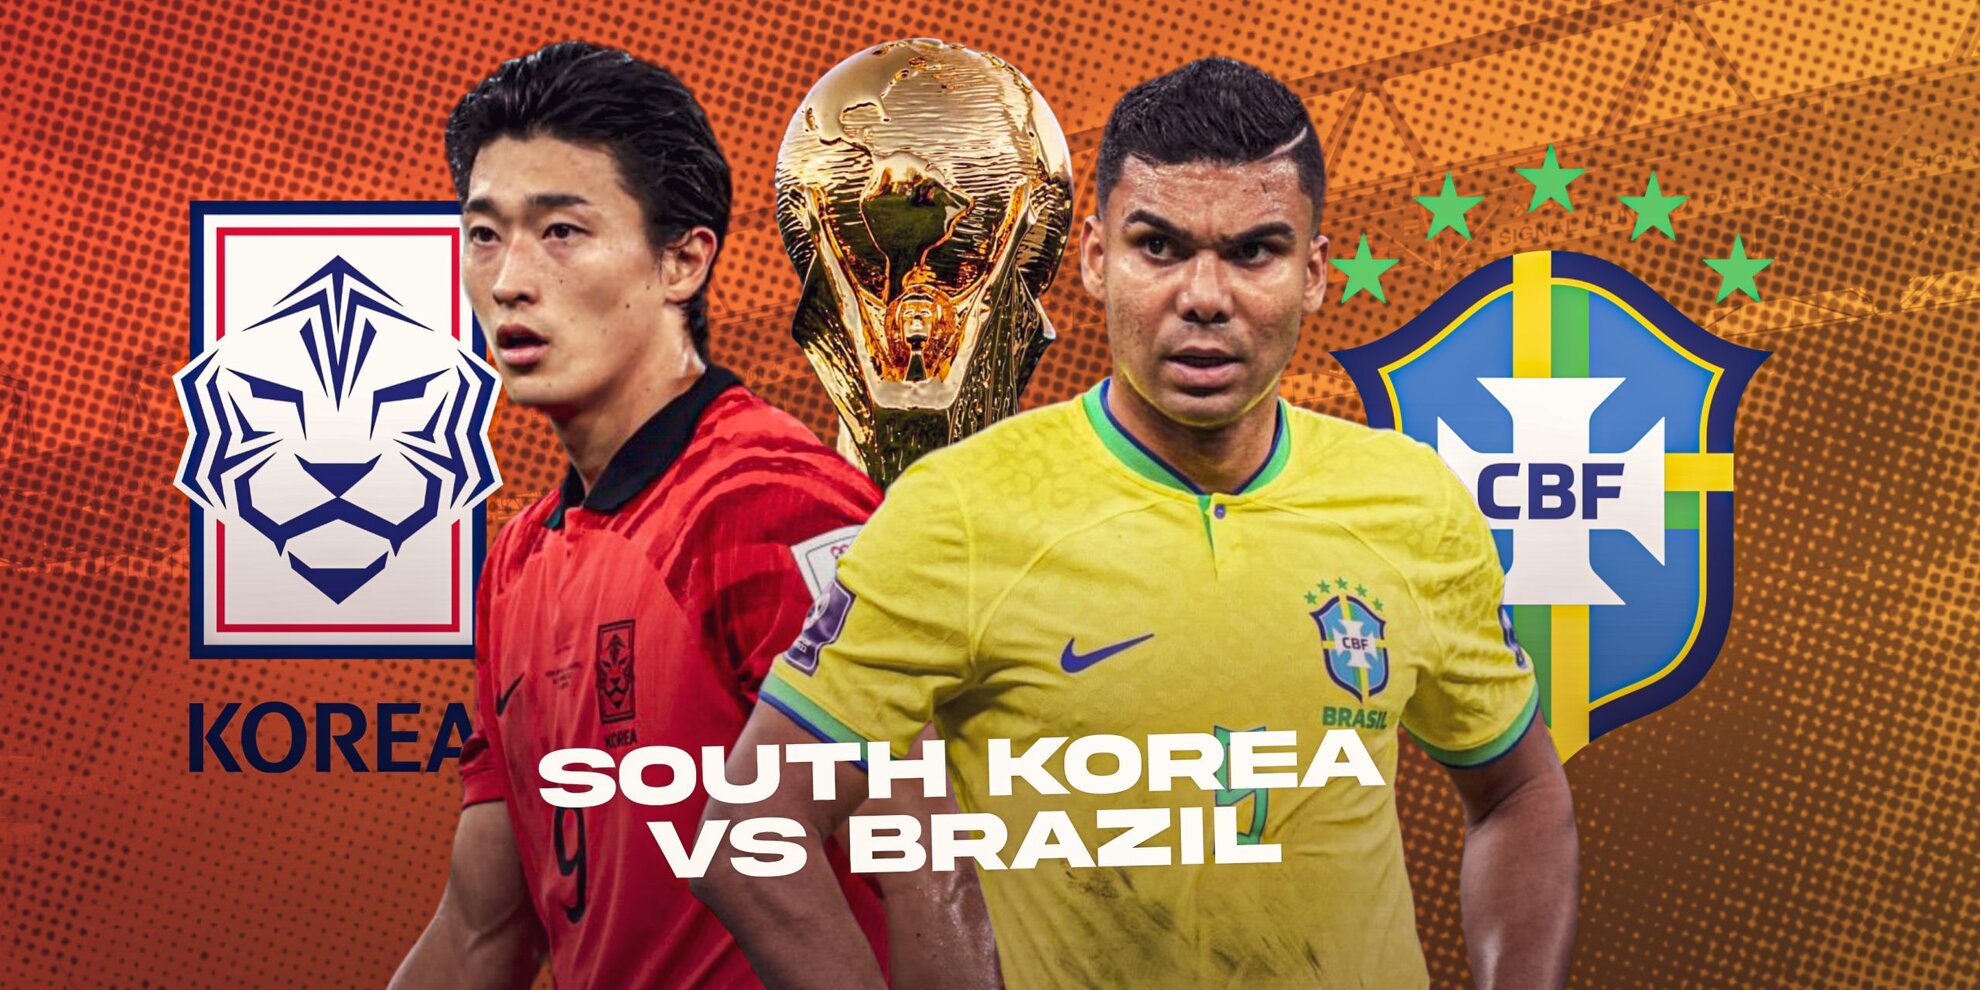 Brazil vs South Korea Predicted lineup, injury news, head-to-head